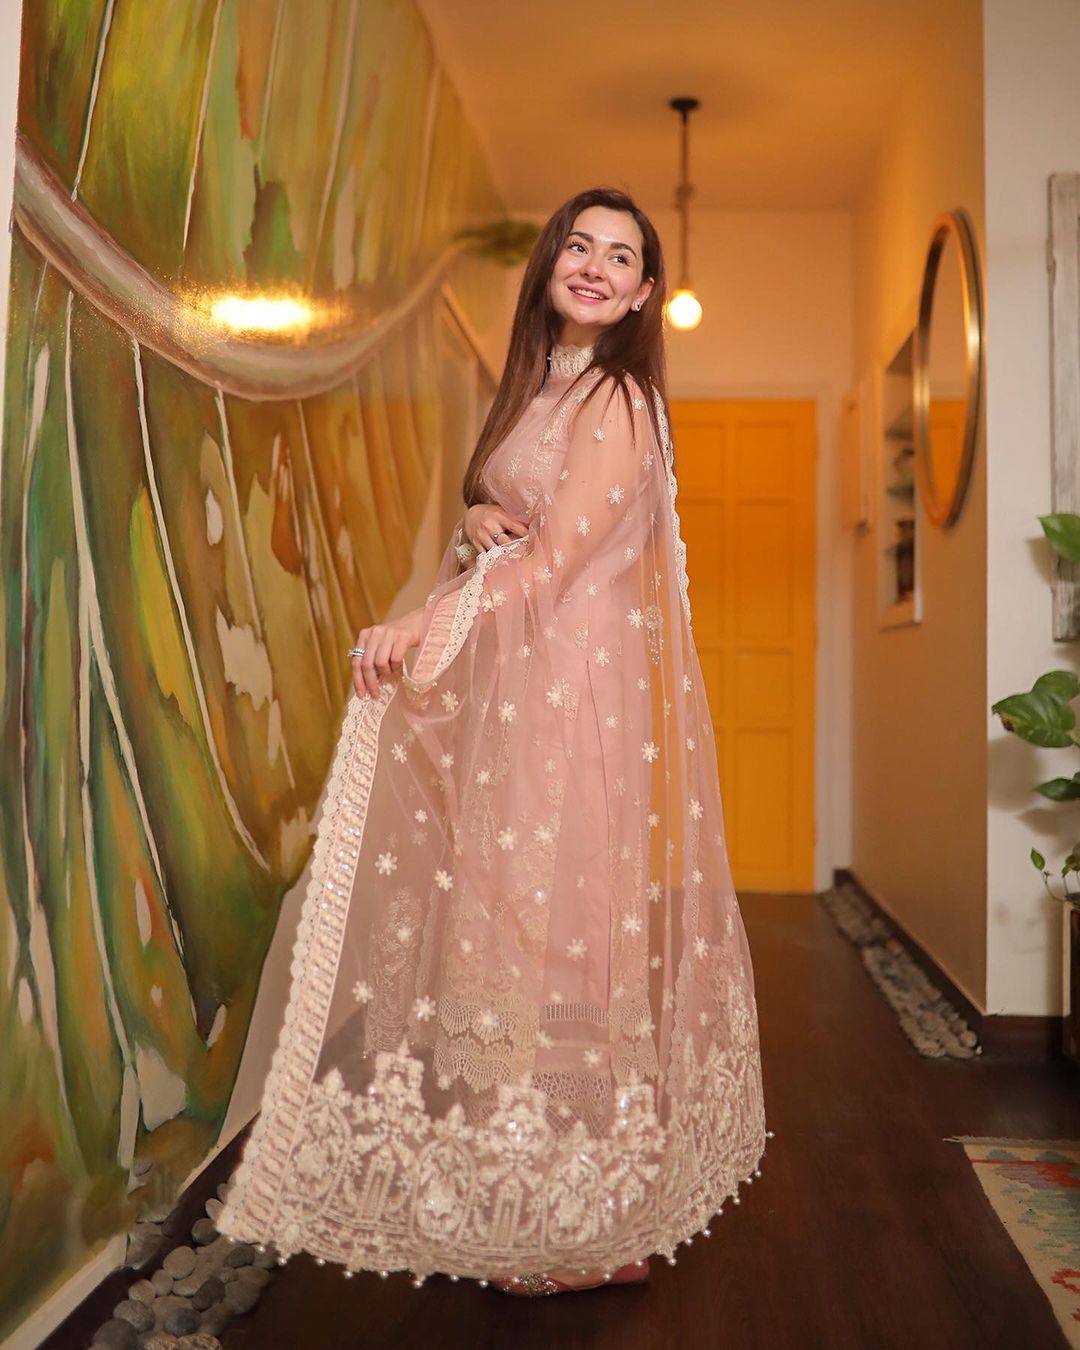 Fashion Icon Hania Amir Looks Elegant in Latest Shoot - Lens